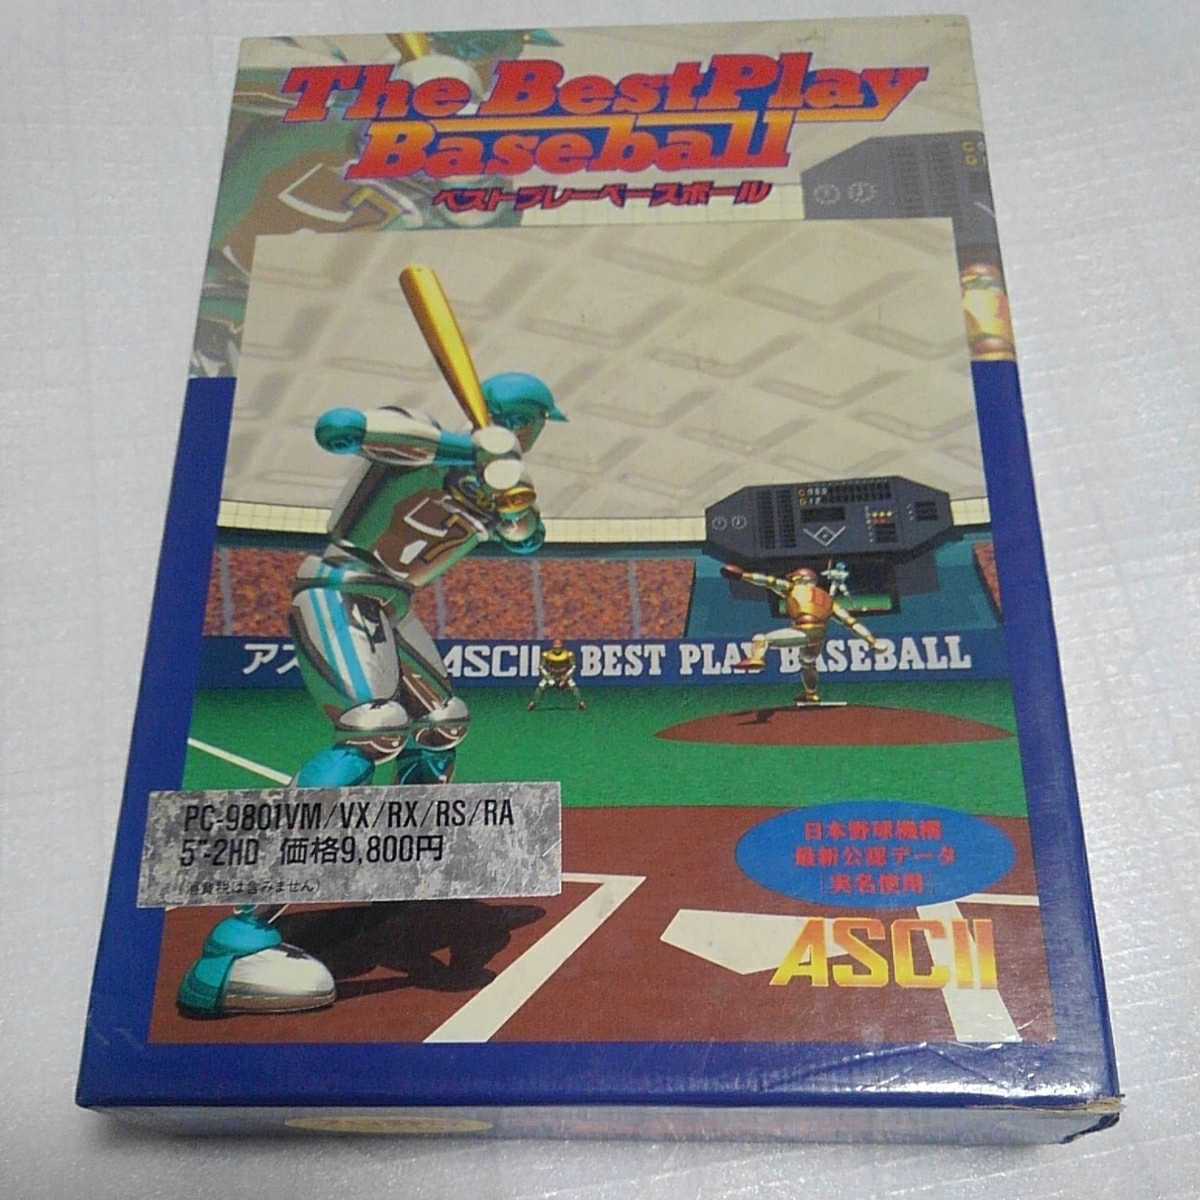 PC-98 версия The BestPlayBaseball лучший pre - Baseball ( б/у :5 дюймовый, работоспособность не проверялась )